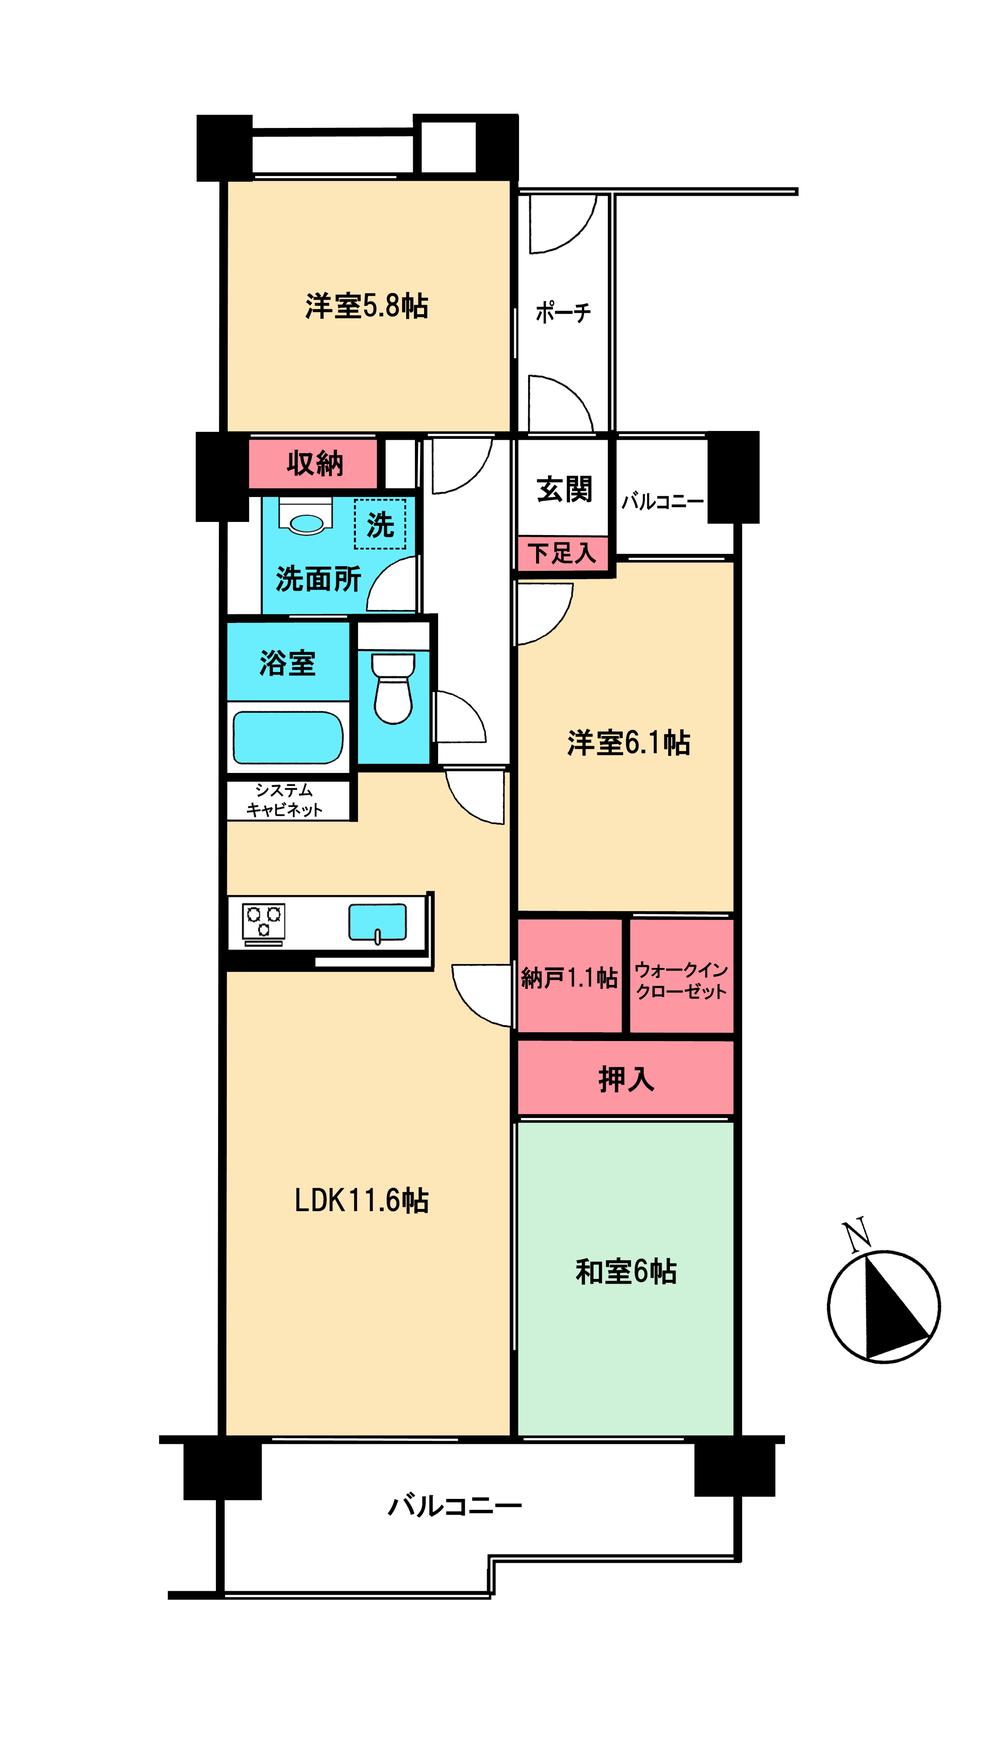 Floor plan. 3LDK + S (storeroom), Price 15.9 million yen, Footprint 71.3 sq m , Balcony area 10.7 sq m